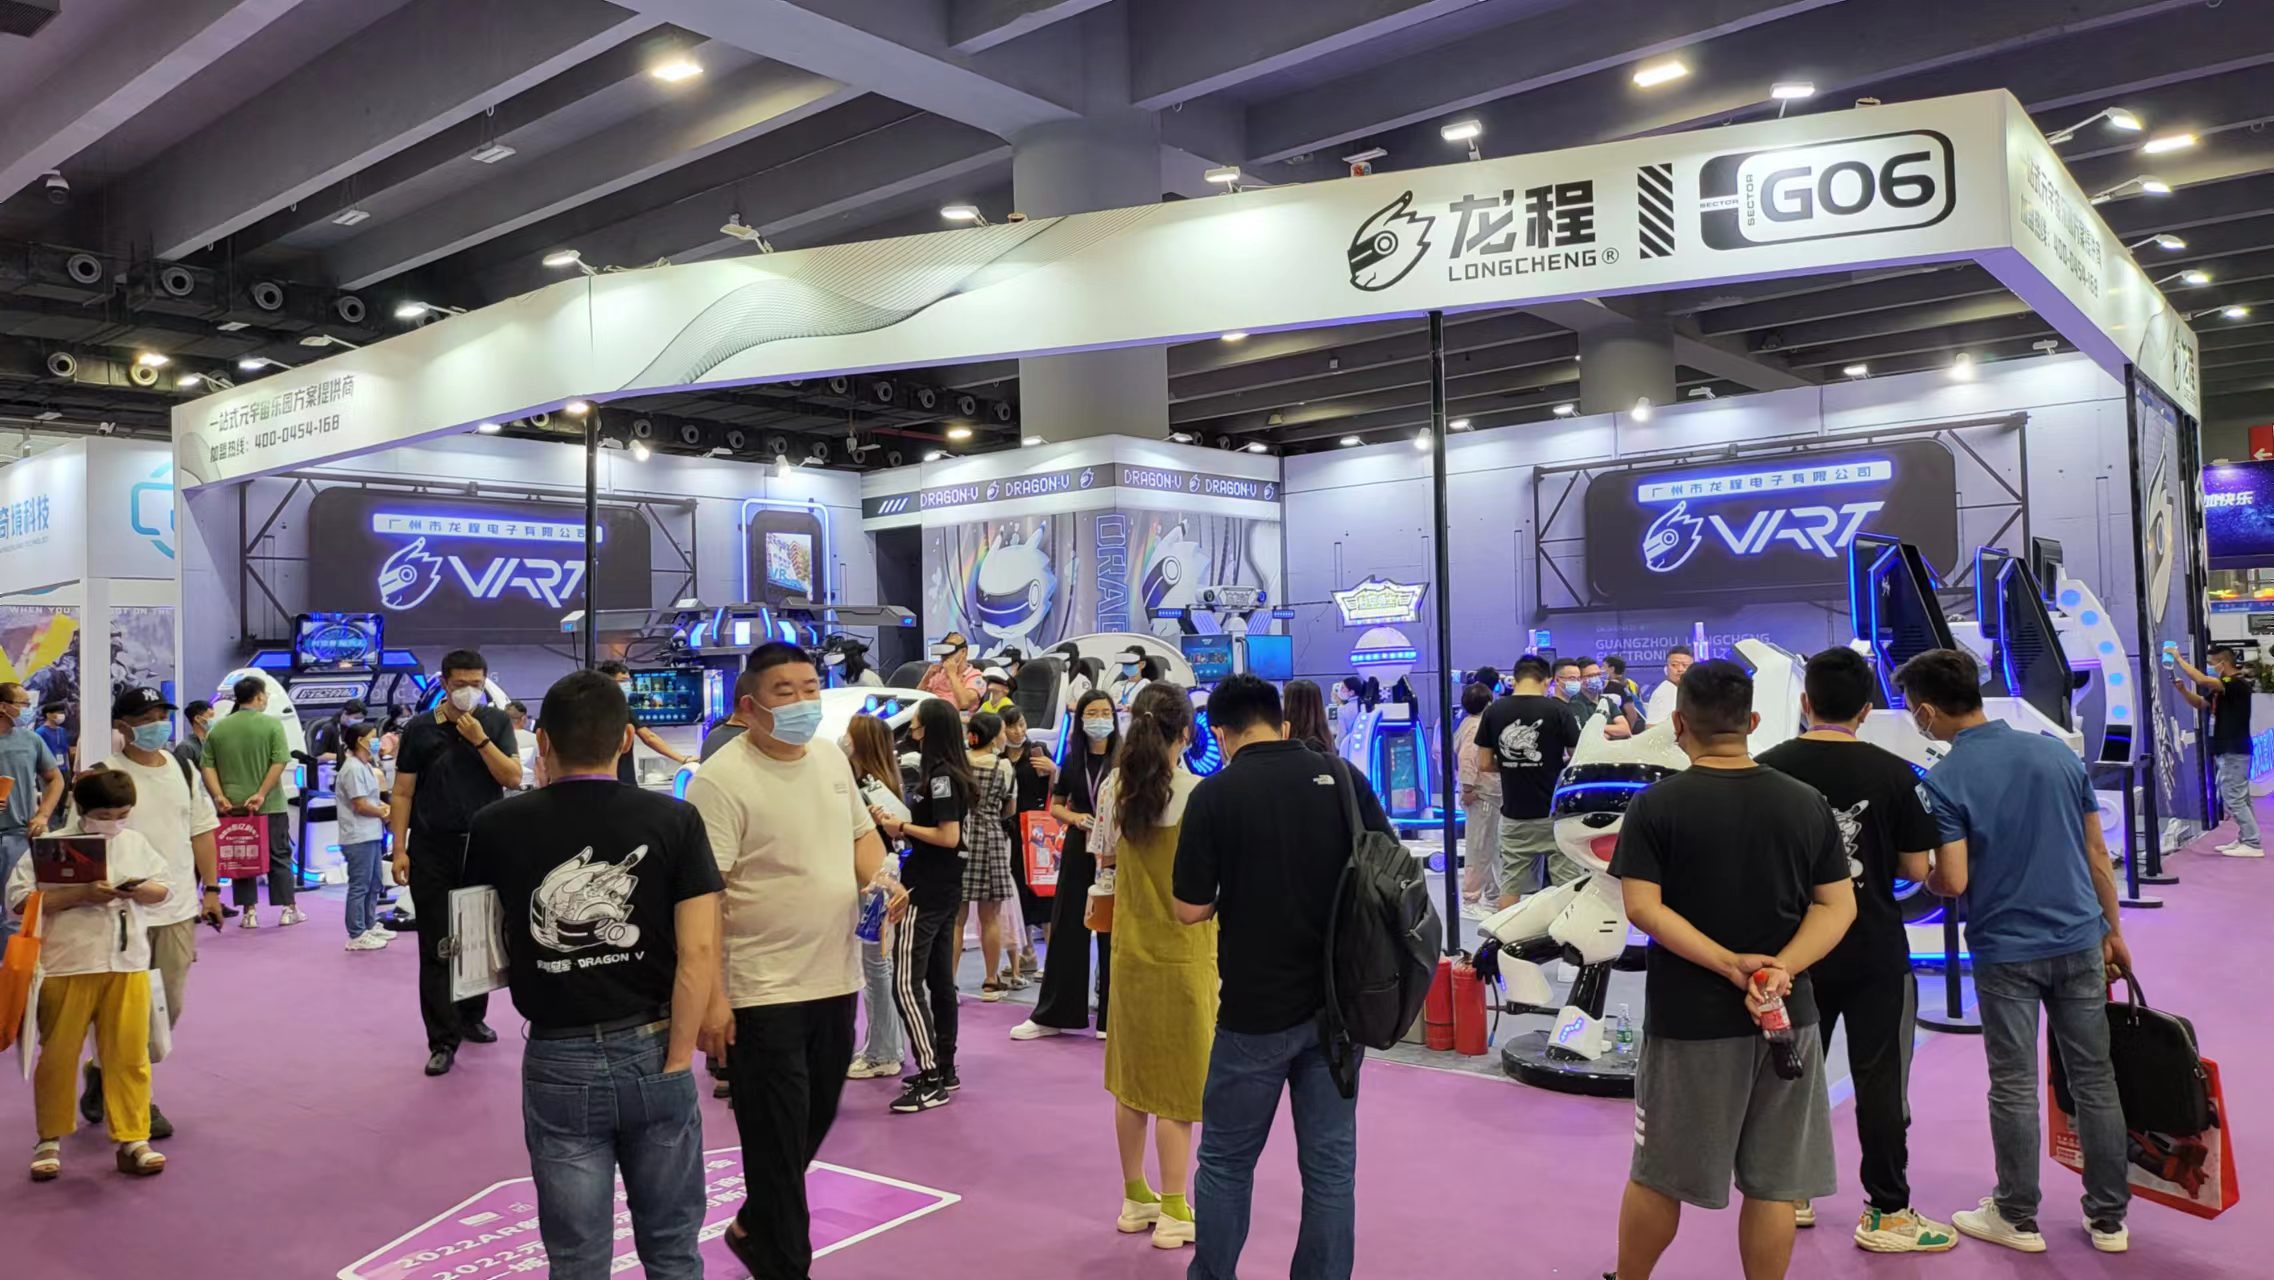 VART VR |Guangzhou Metaverse Erakusketa Booth G06 Benetan ezaguna